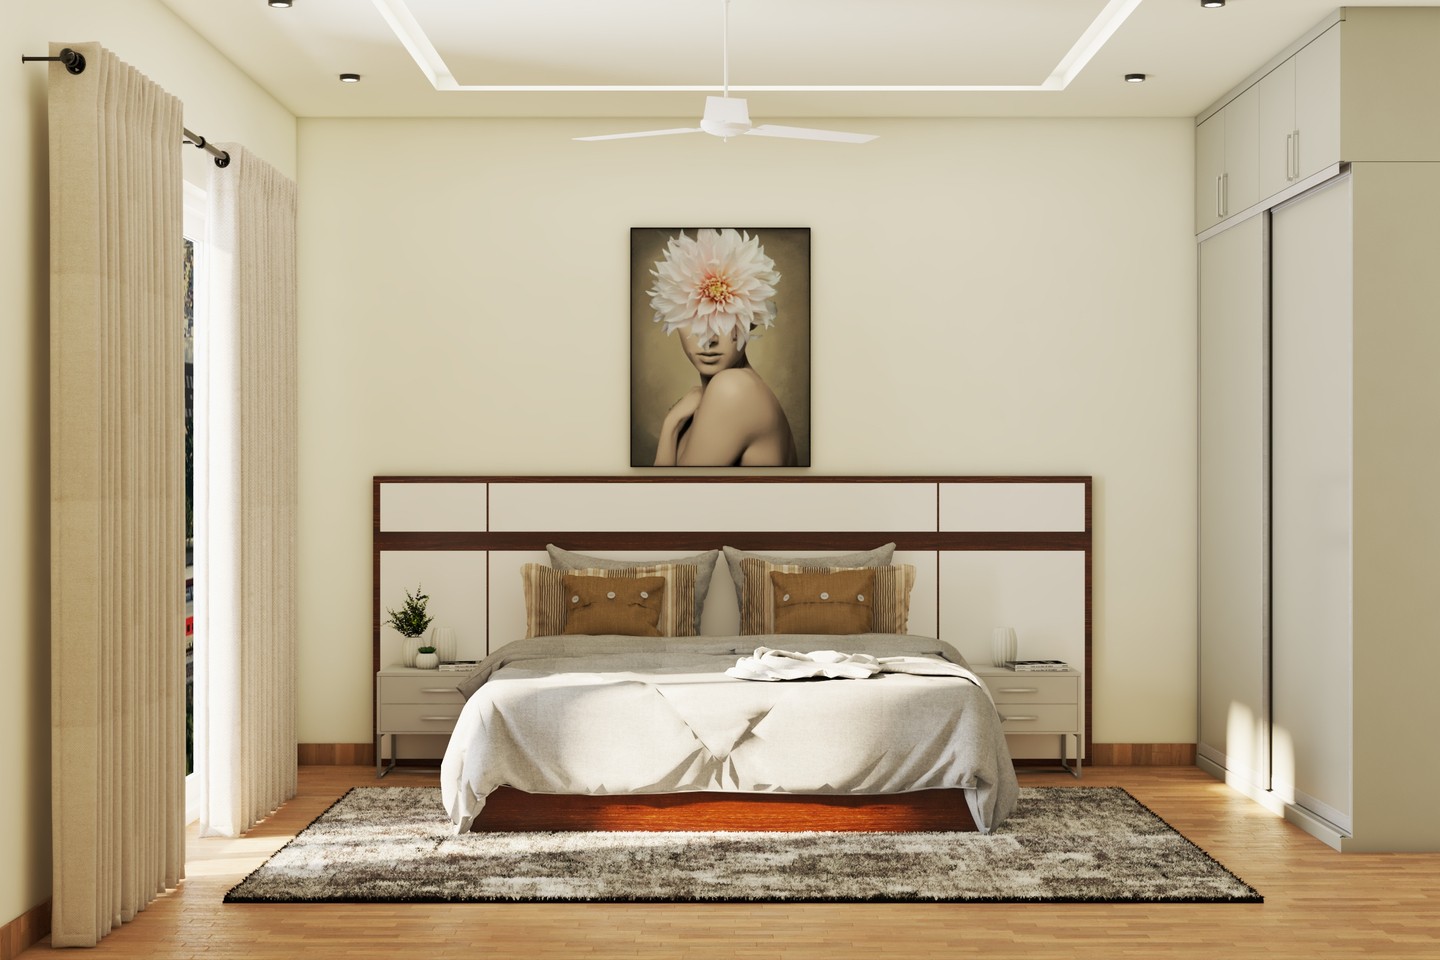 Elegant Master Bedroom Design with Extended Headboard - Livspace